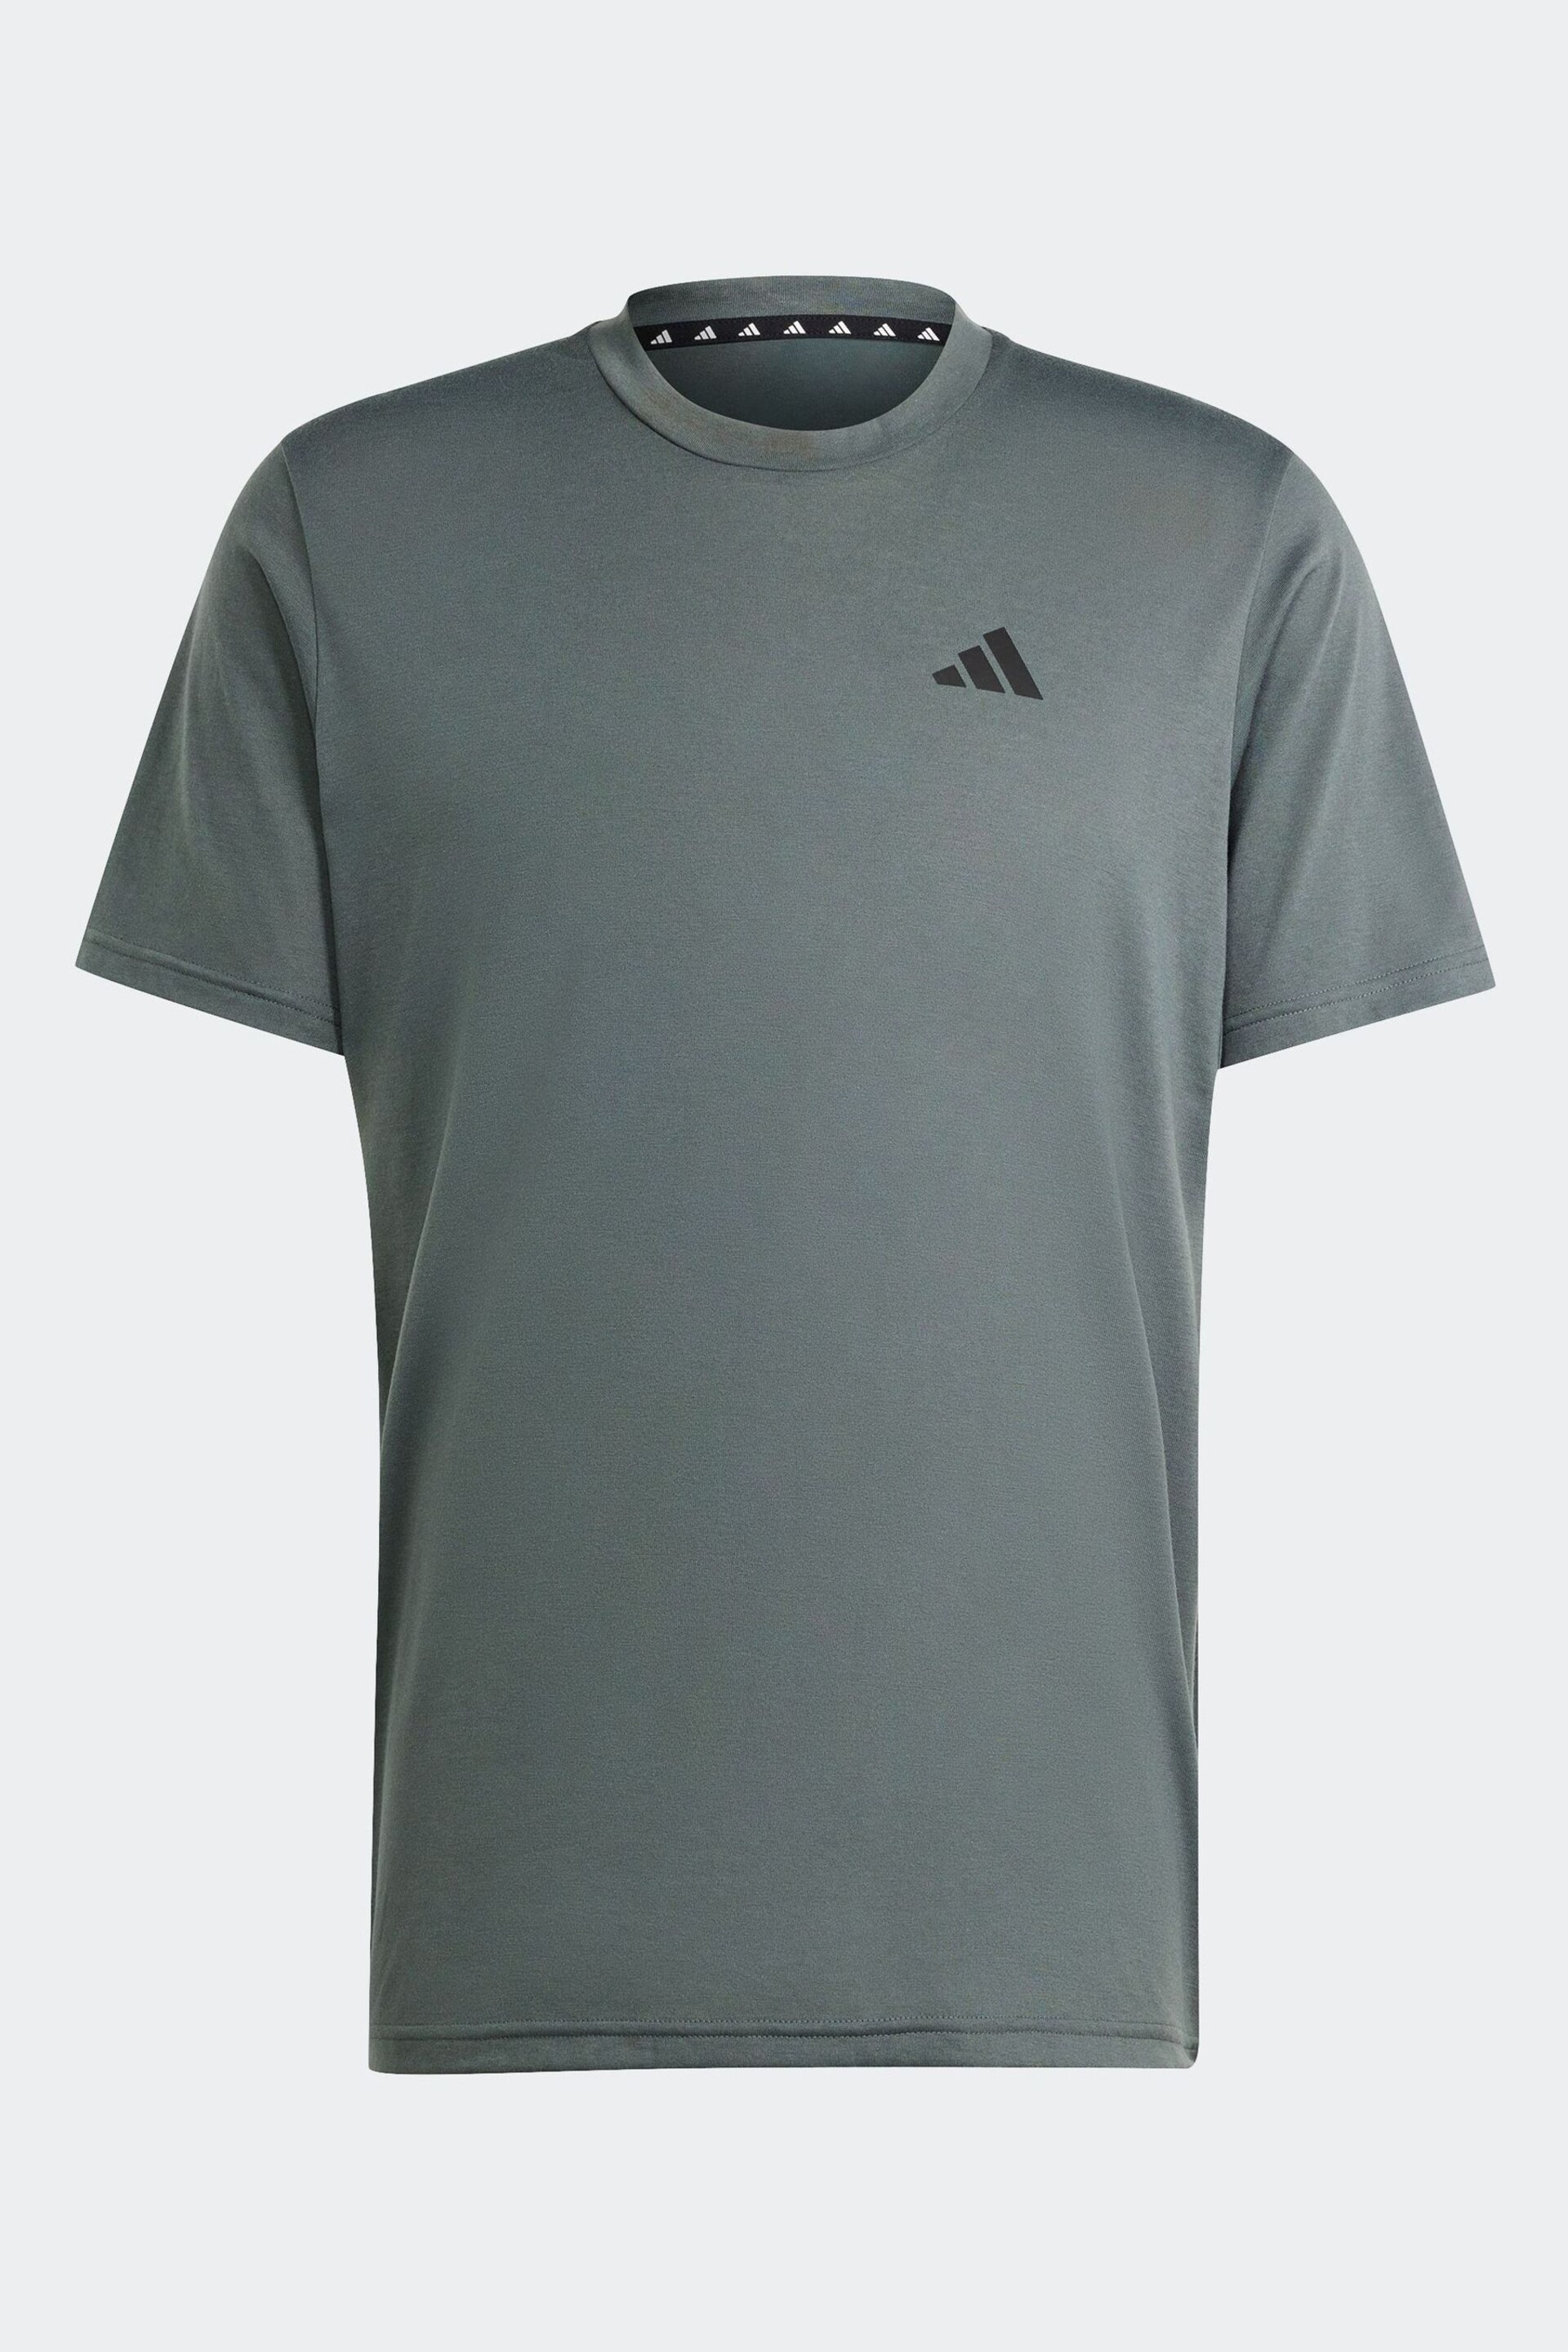 adidas Light Grey Train Essentials Feelready Training T-Shirt - Image 8 of 8